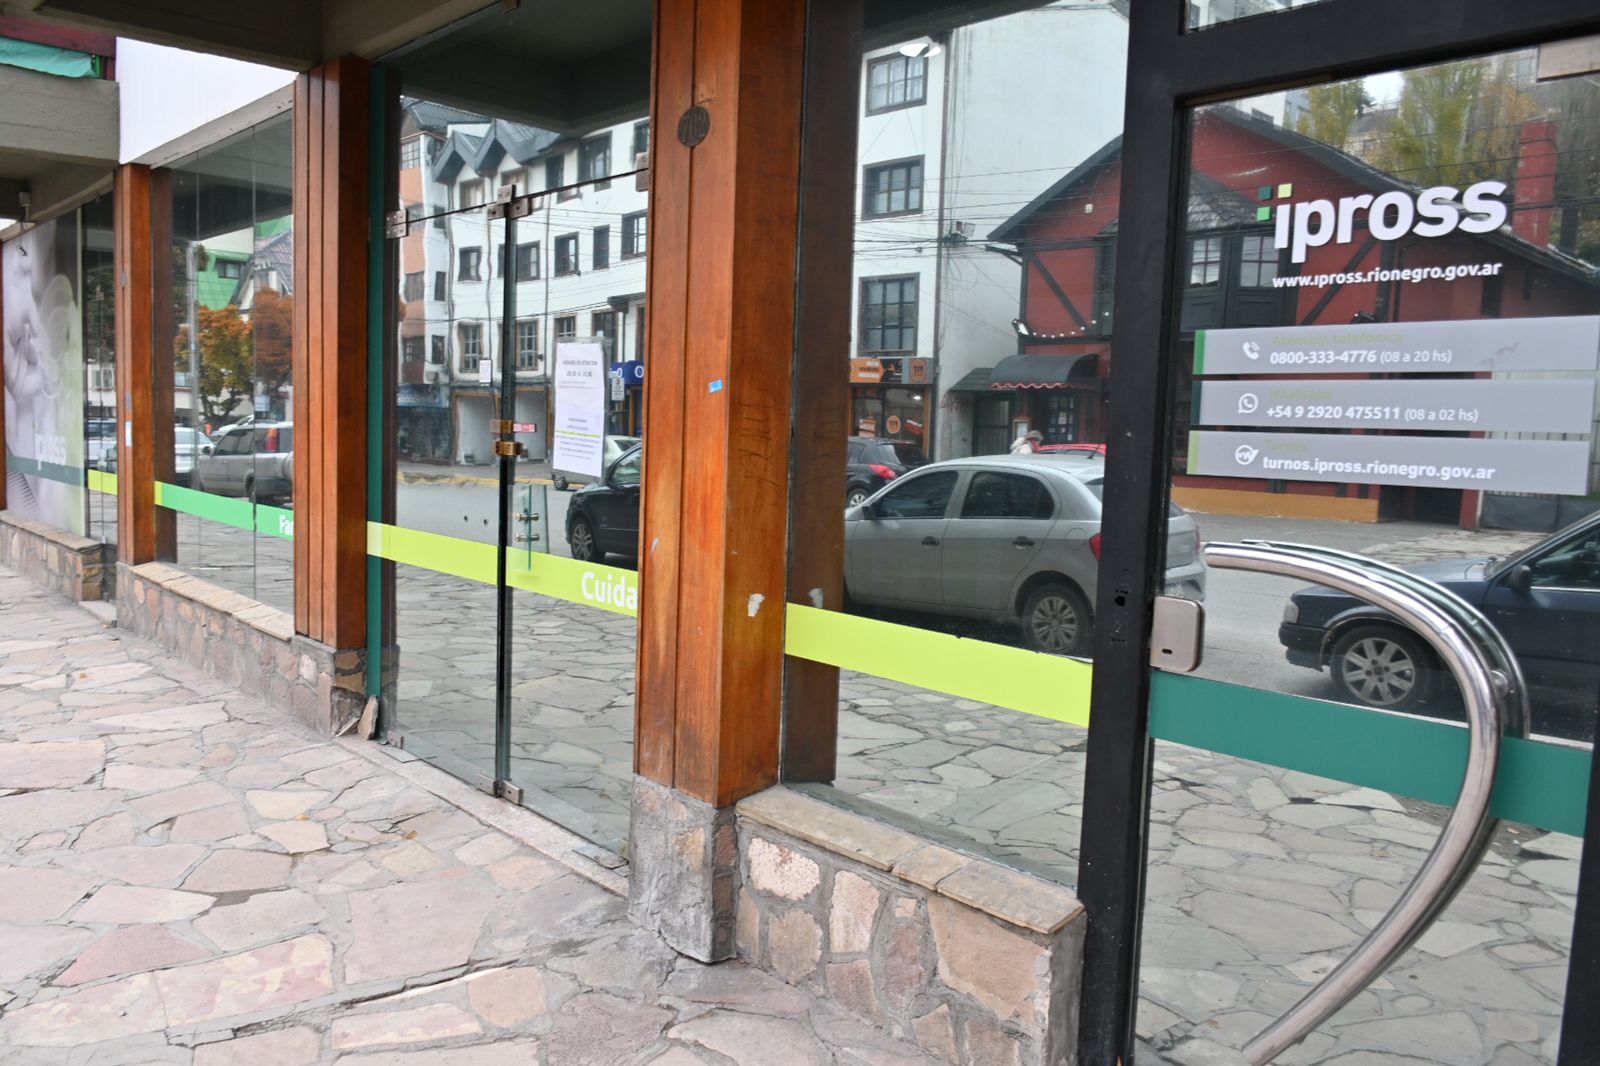 La sede del Ipross en la calle Mitre de Bariloche. Foto: Chino Leiva